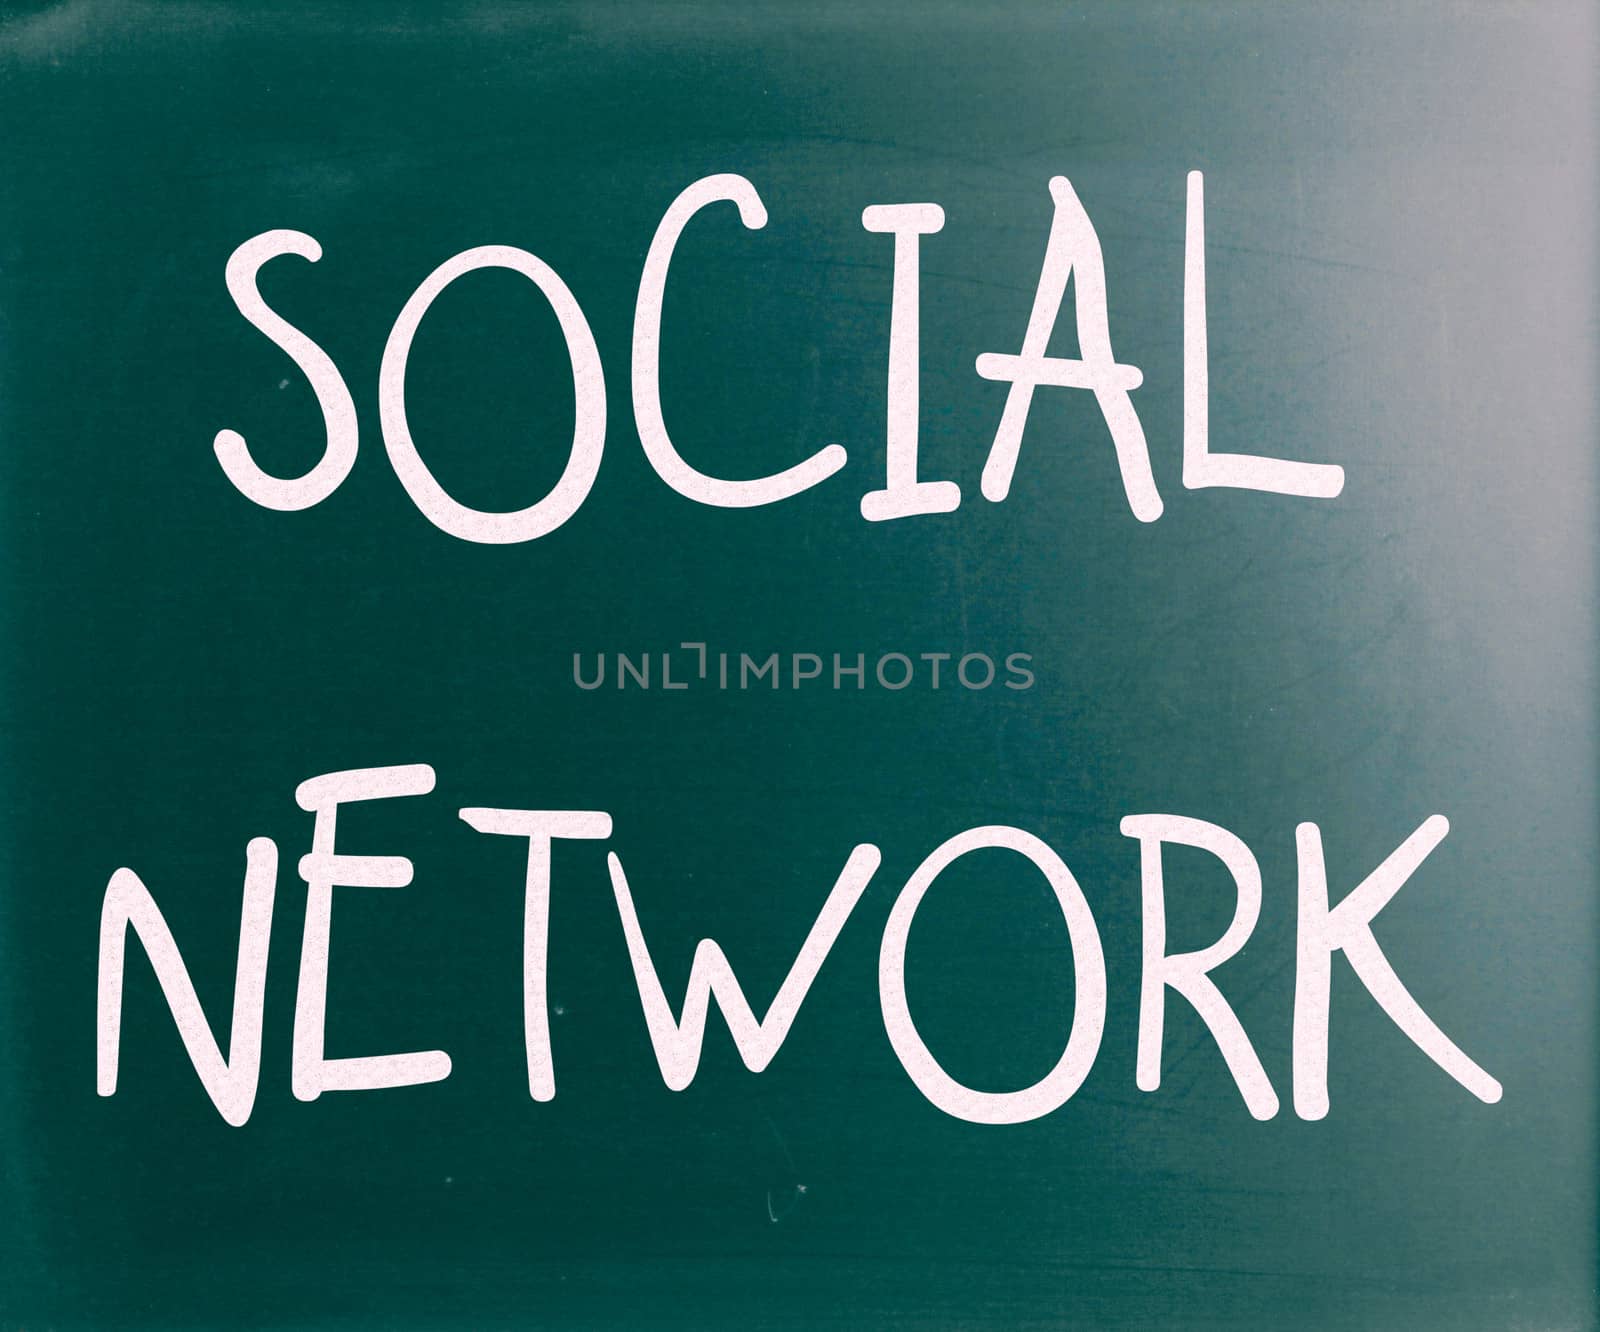 "Social network" handwritten with white chalk on a blackboard by nenov